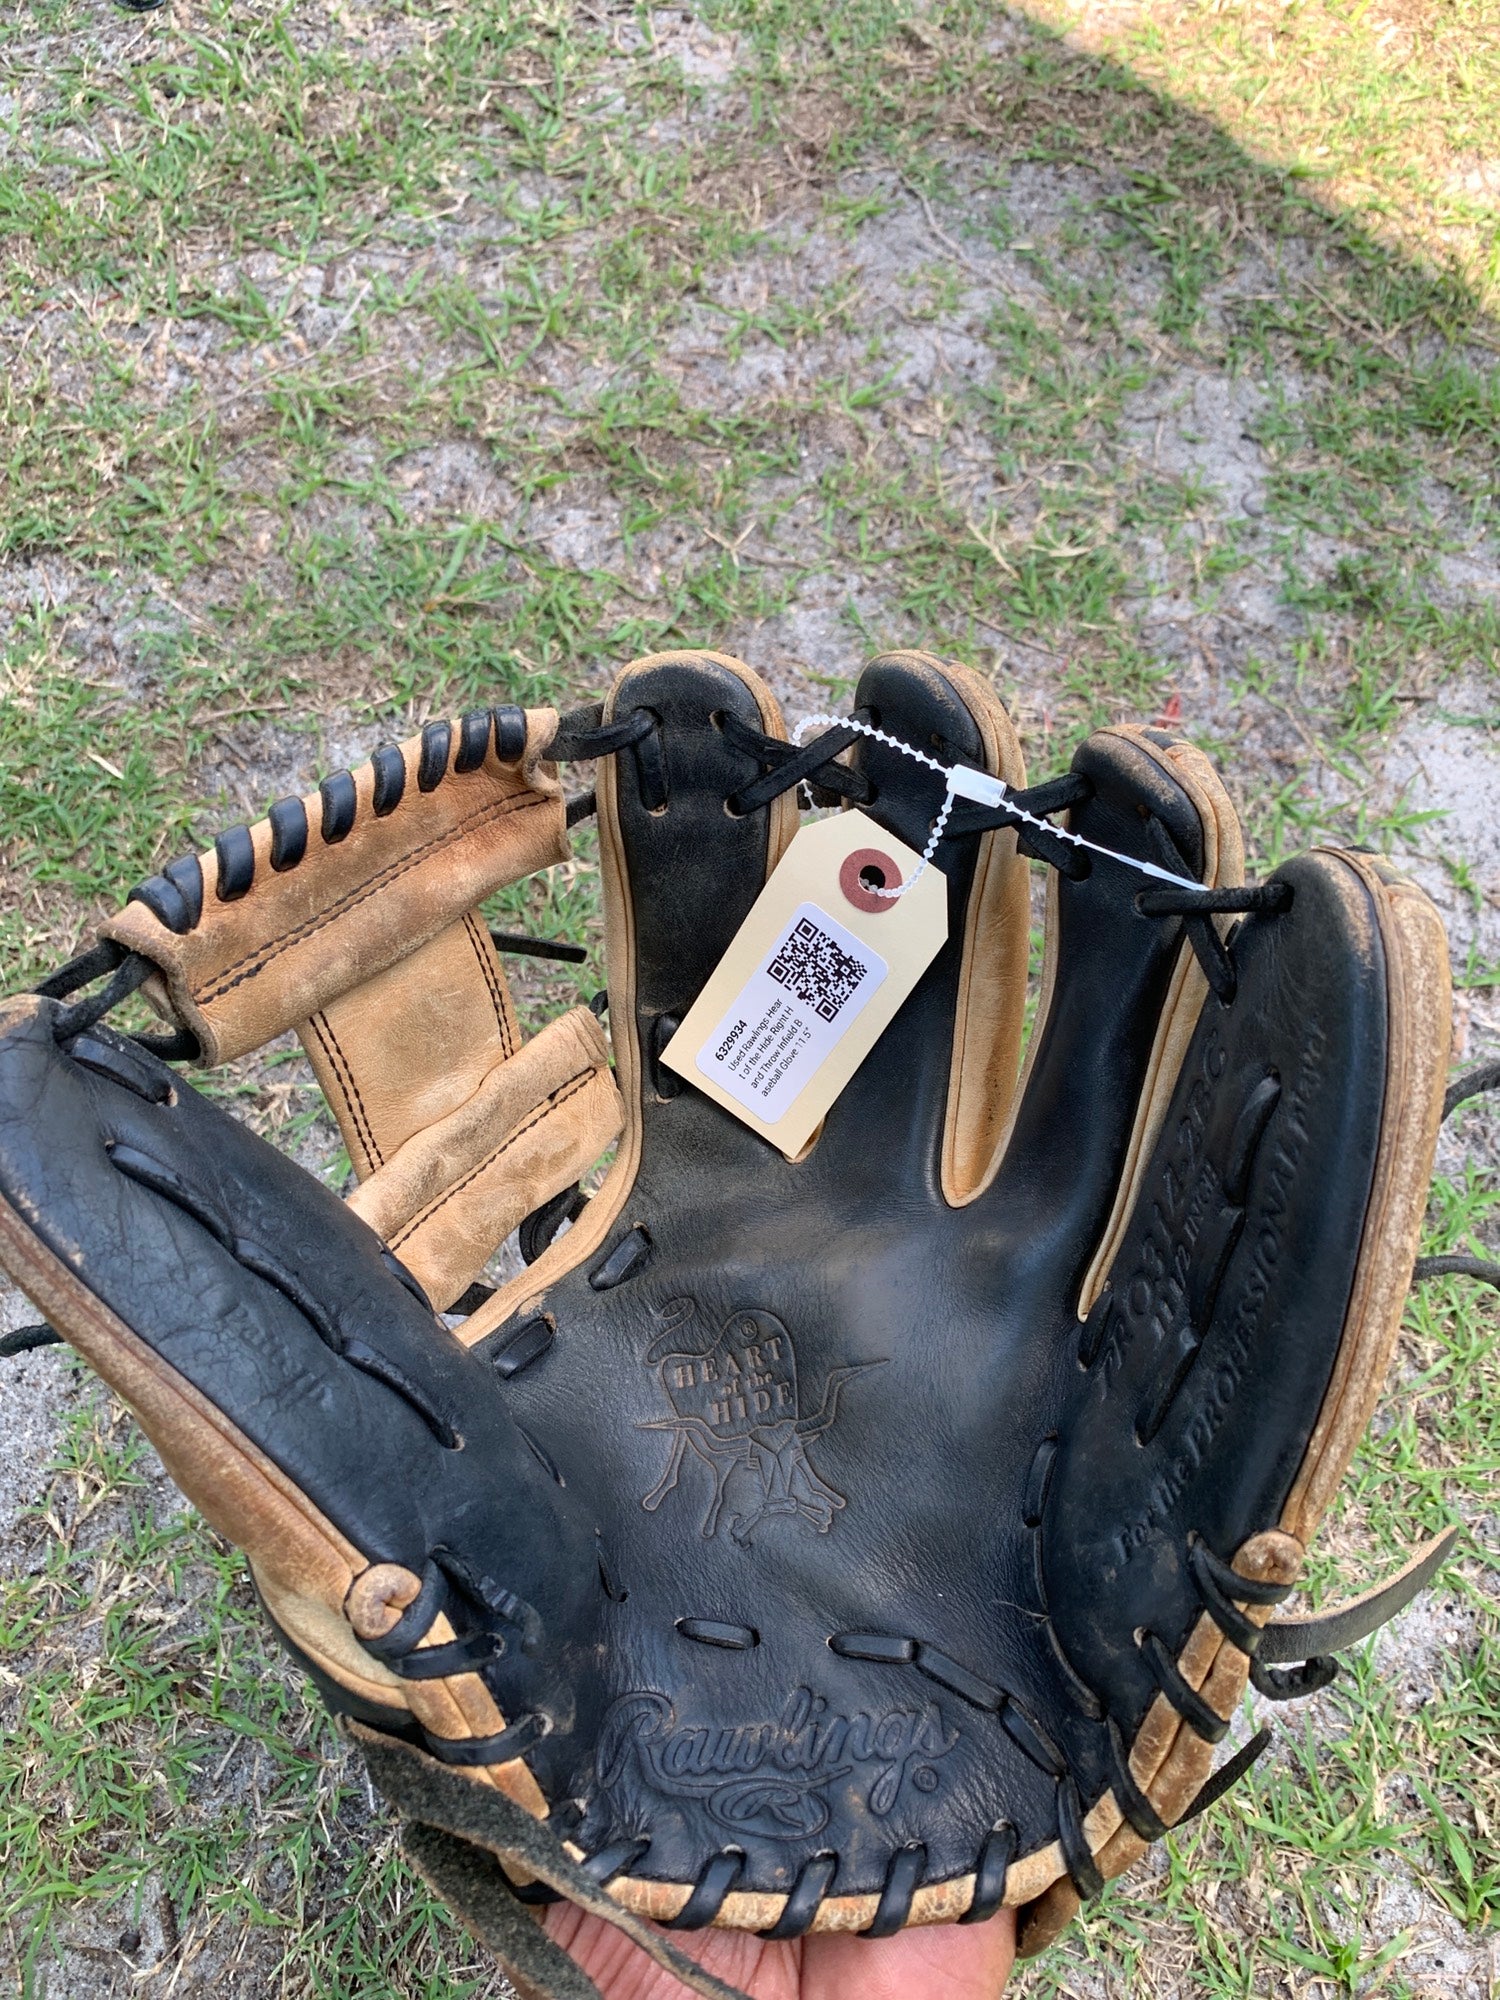 2020 Christian Yelich Model 12.75 Heart of the Hide Baseball Glove